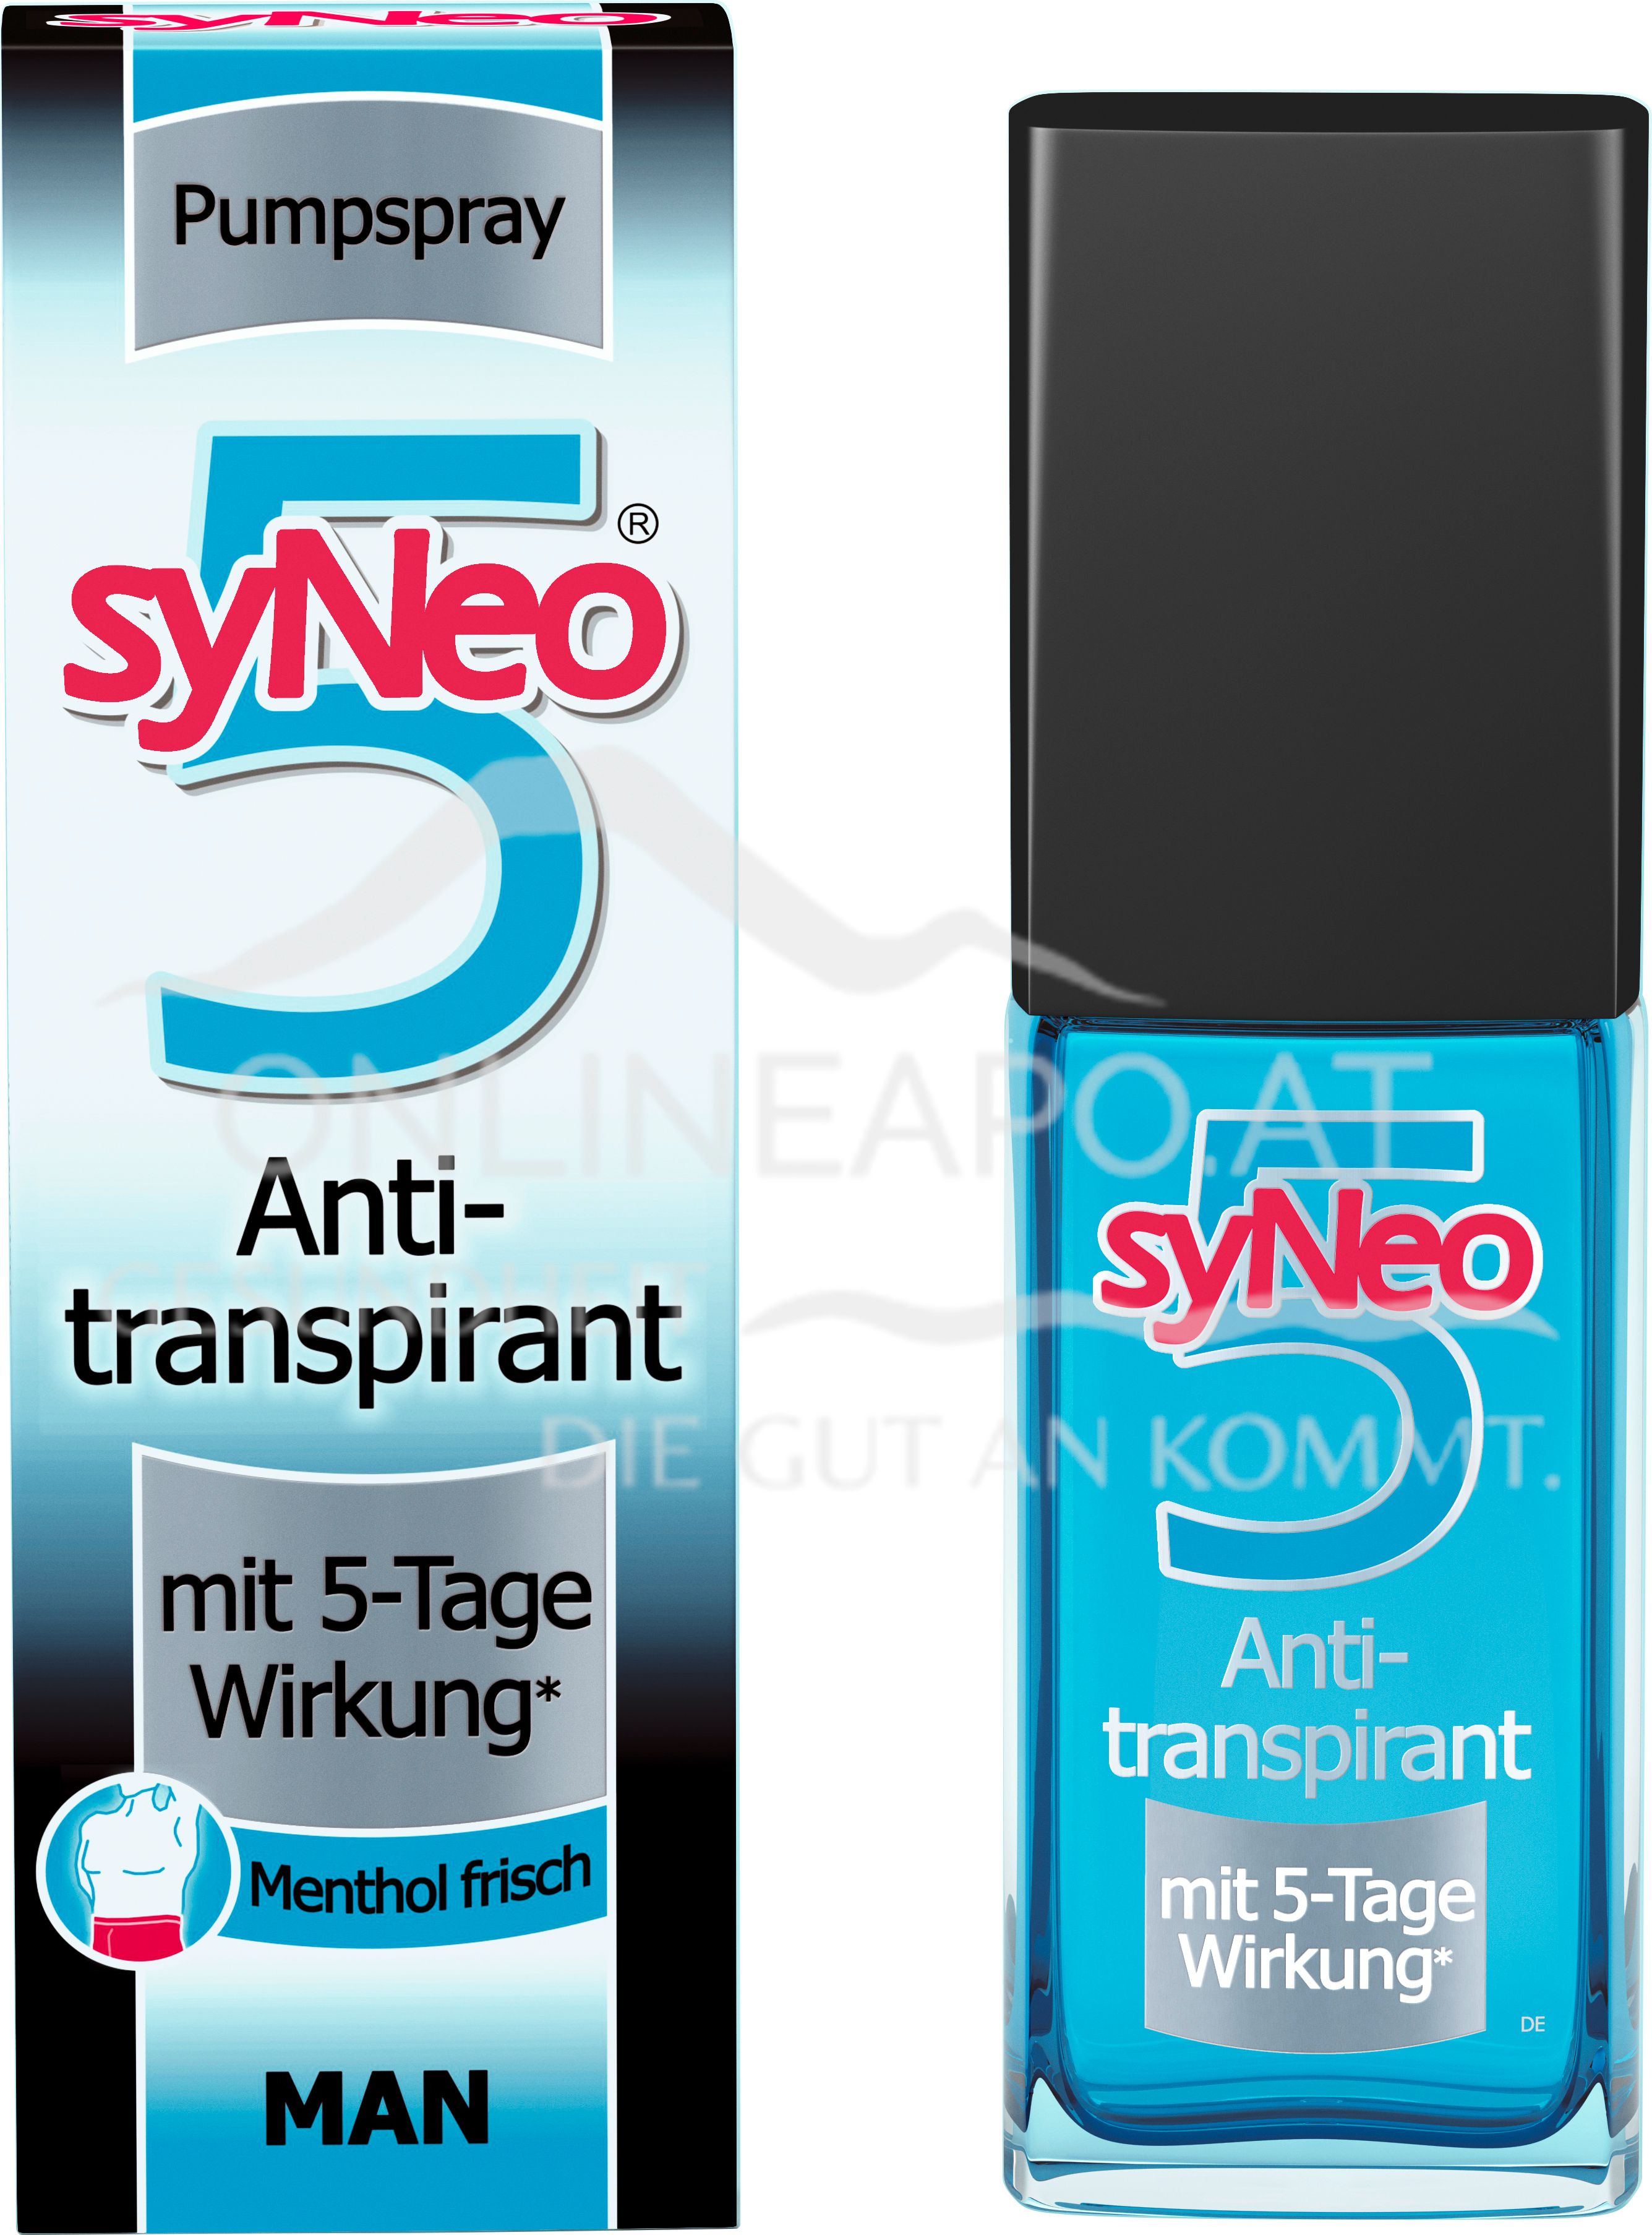 syNeo 5 man Deo-Antitranspirant Pumpspray